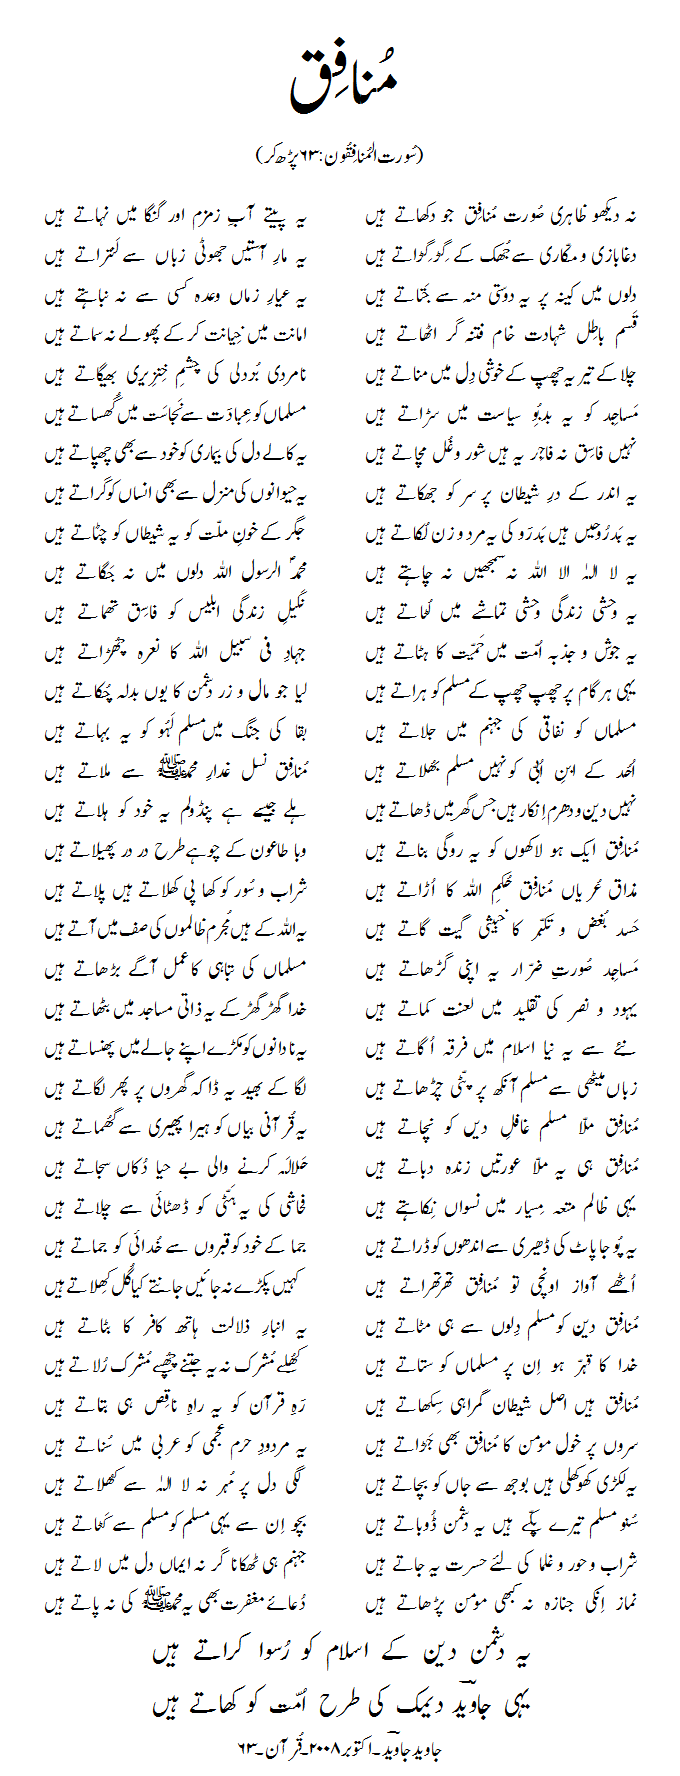 Munafiq poem by Javed Javed